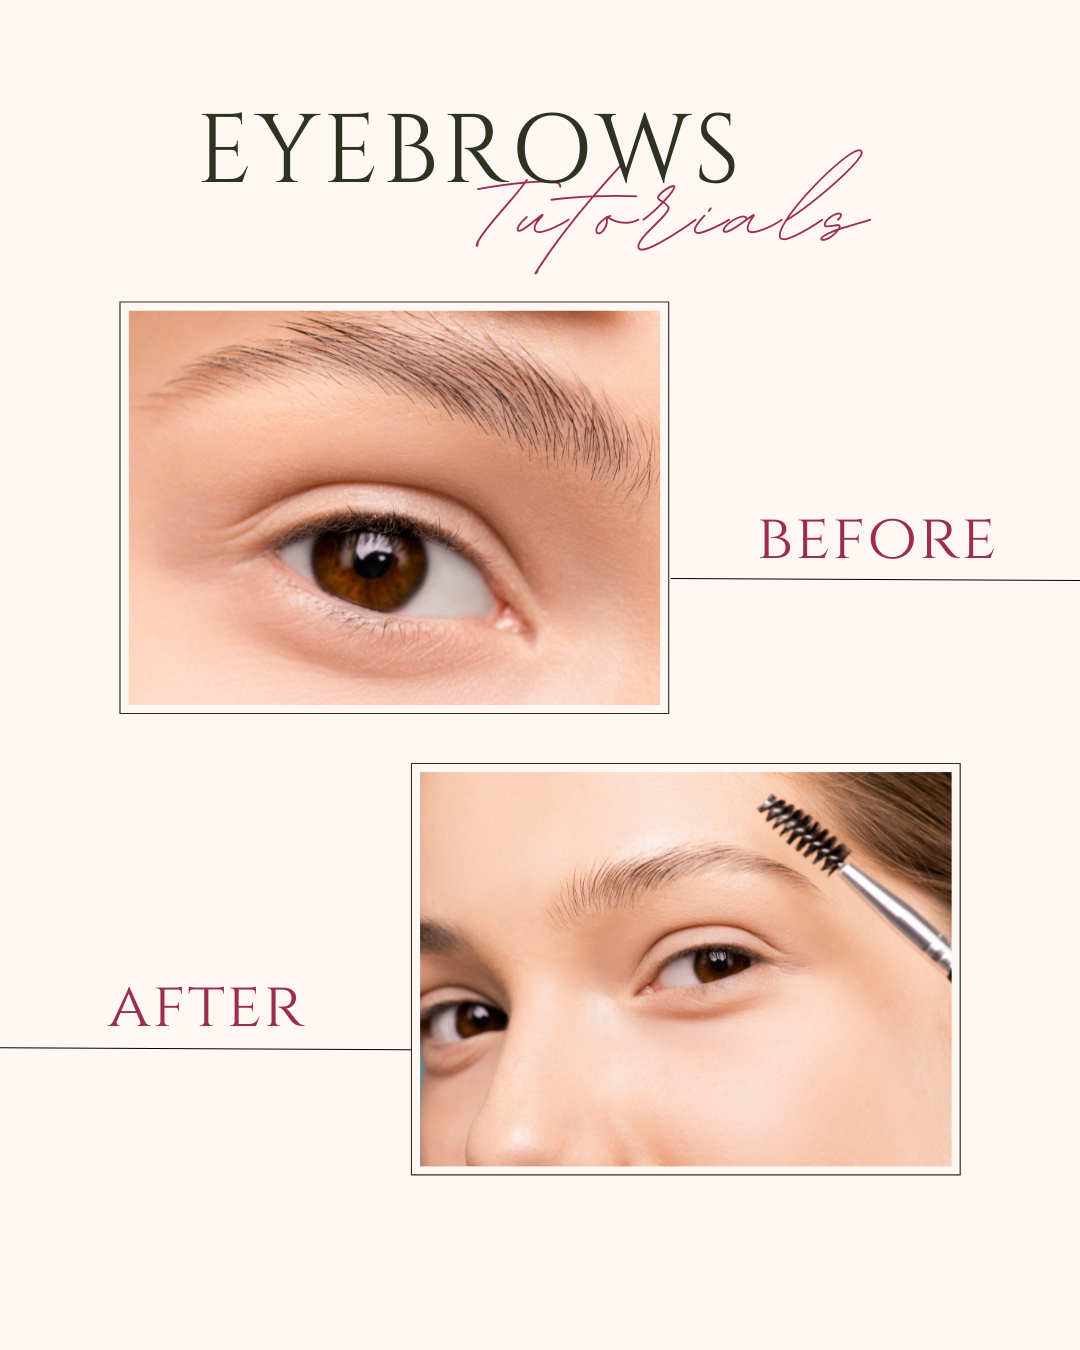 Introduction to Eyebrow Tutorials